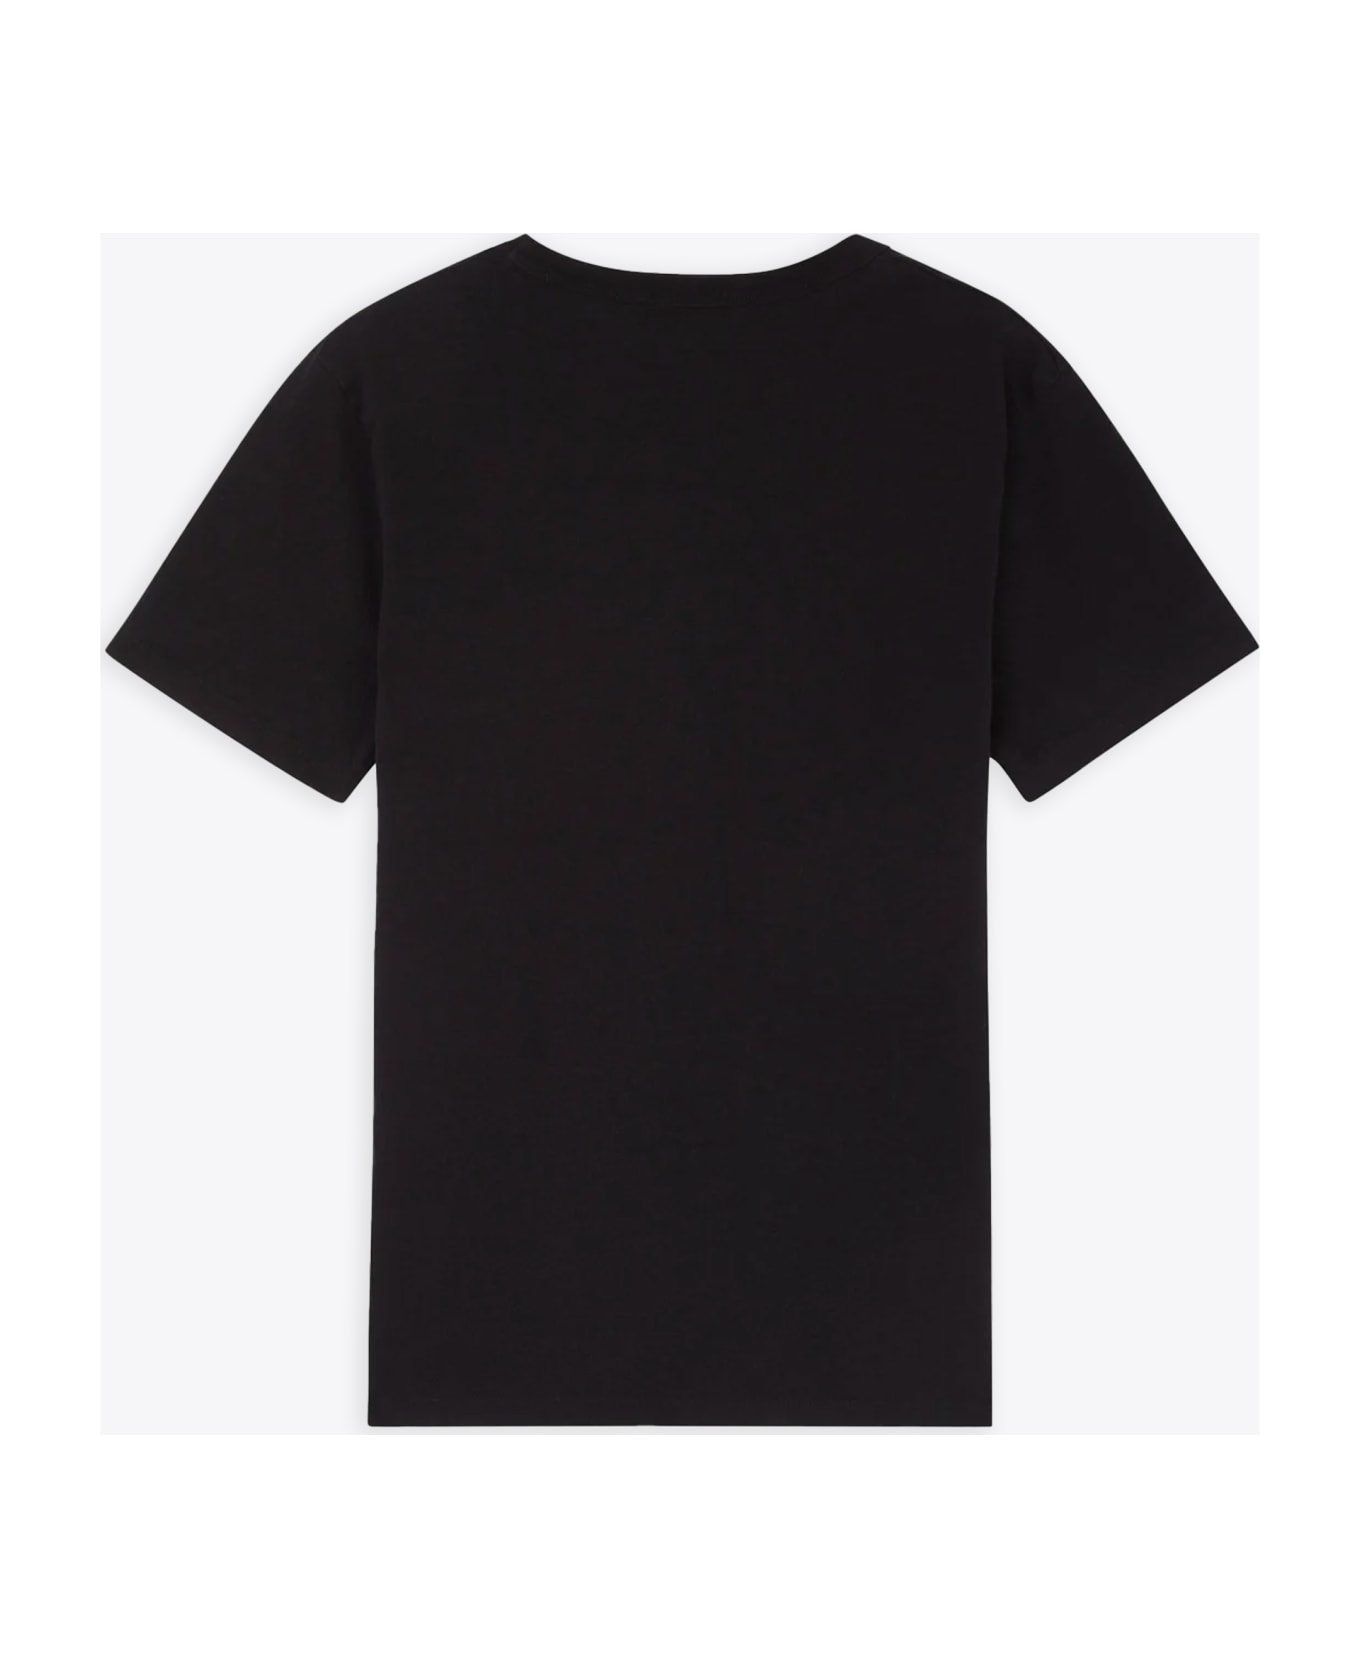 Maison Kitsuné Fox Head Patch Regular Tee Shirt Black Cotton T-shirt With Chest Patch - Fox Head Patch Regular Tee - BLACK